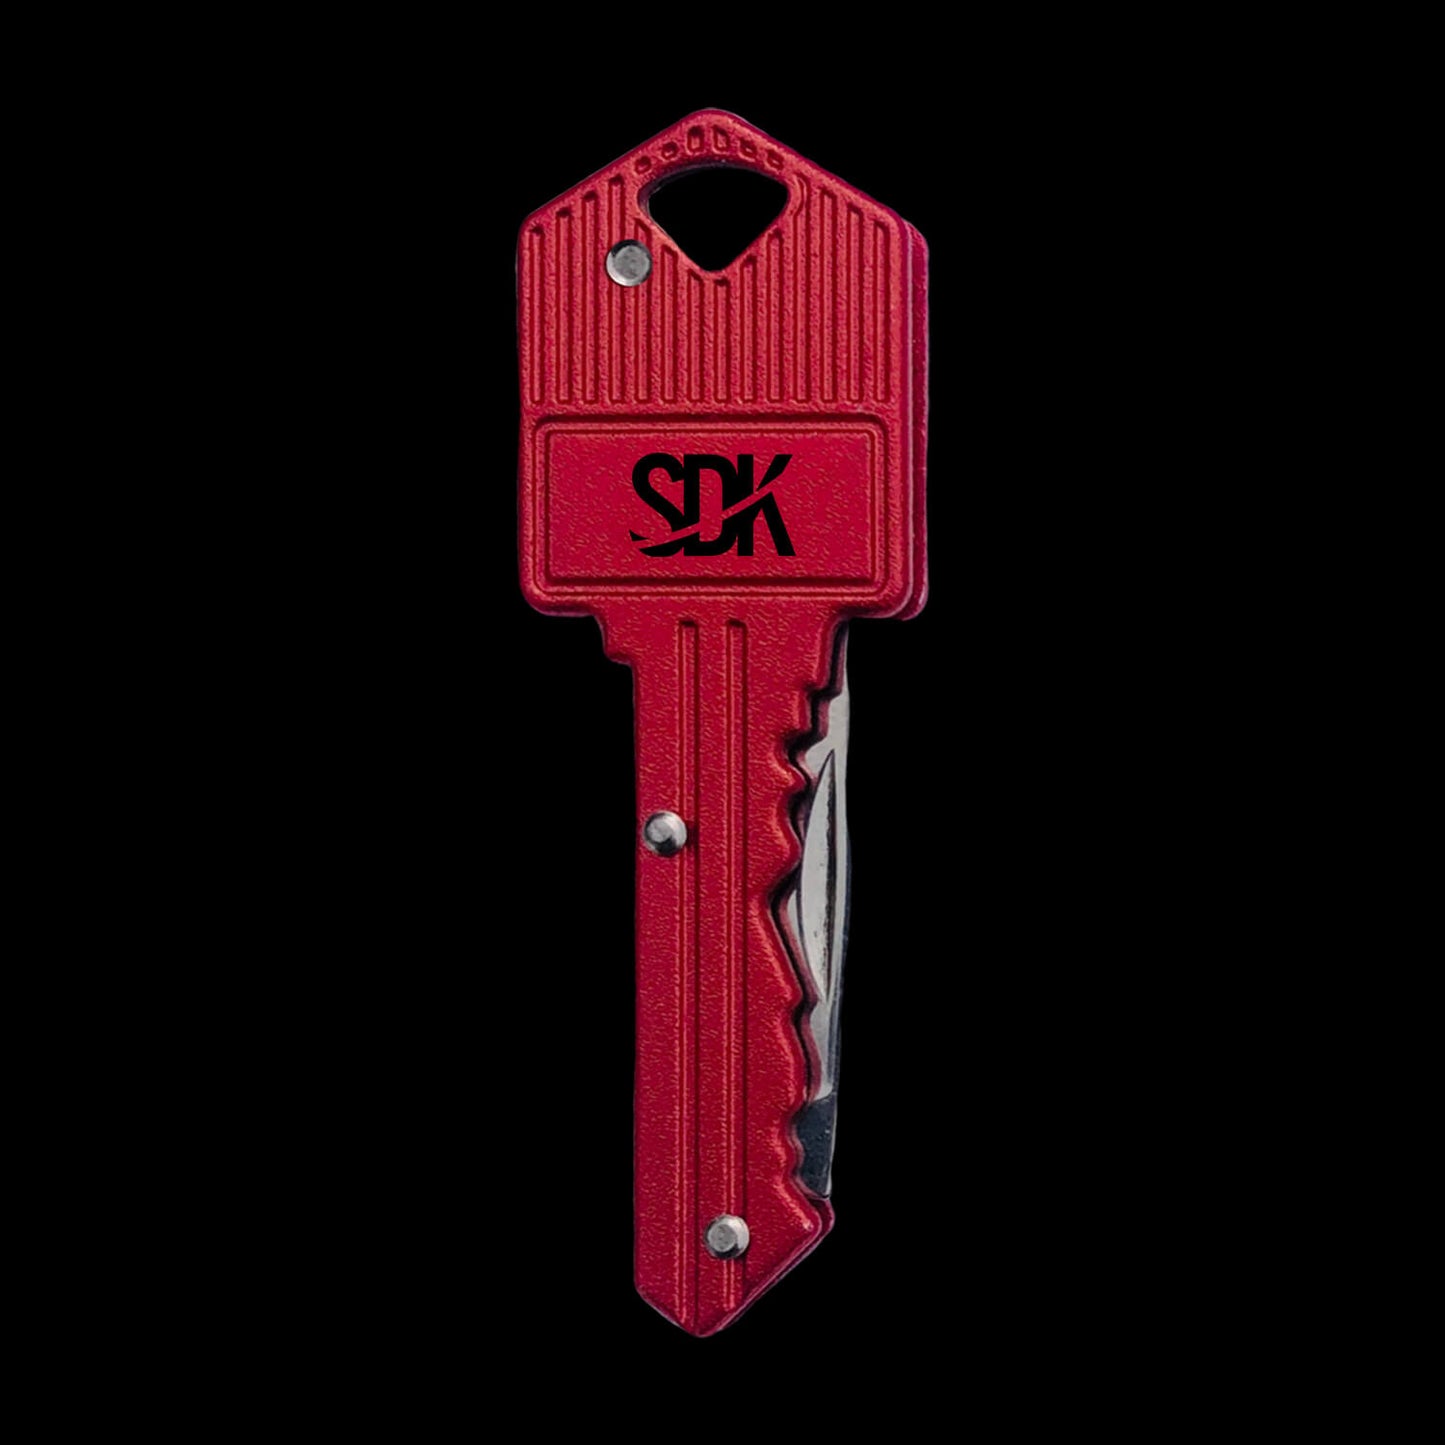 SDK Kit Red Key Knife (closed position) (stainless steel key-shaped flip knife)